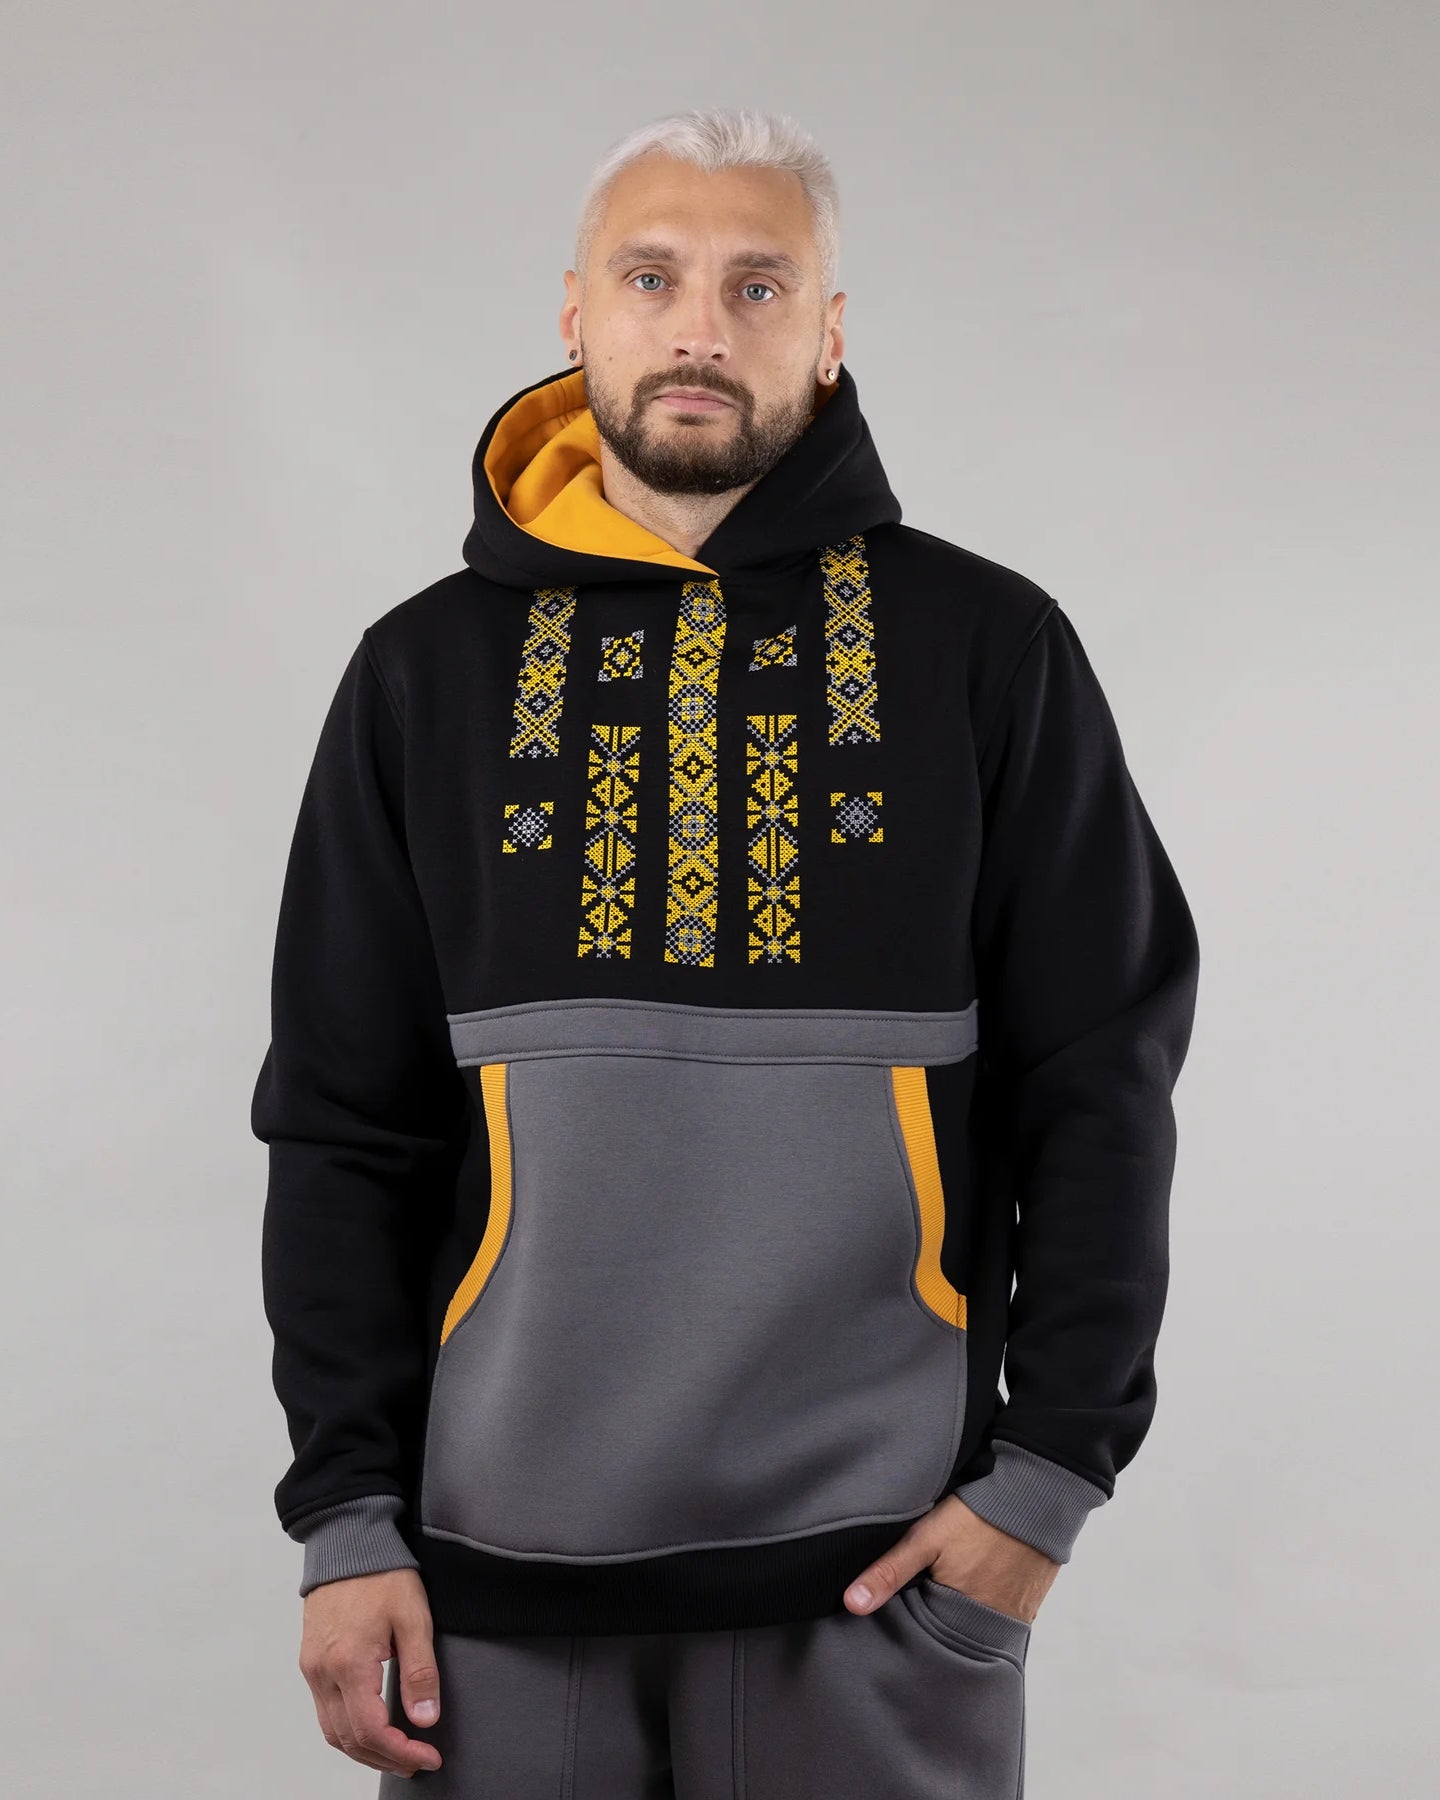 Folk-inspired: Black, Gray, and Brown Hoodie "Folk", warm casual hoodie Ukrainian vyshyvanka style